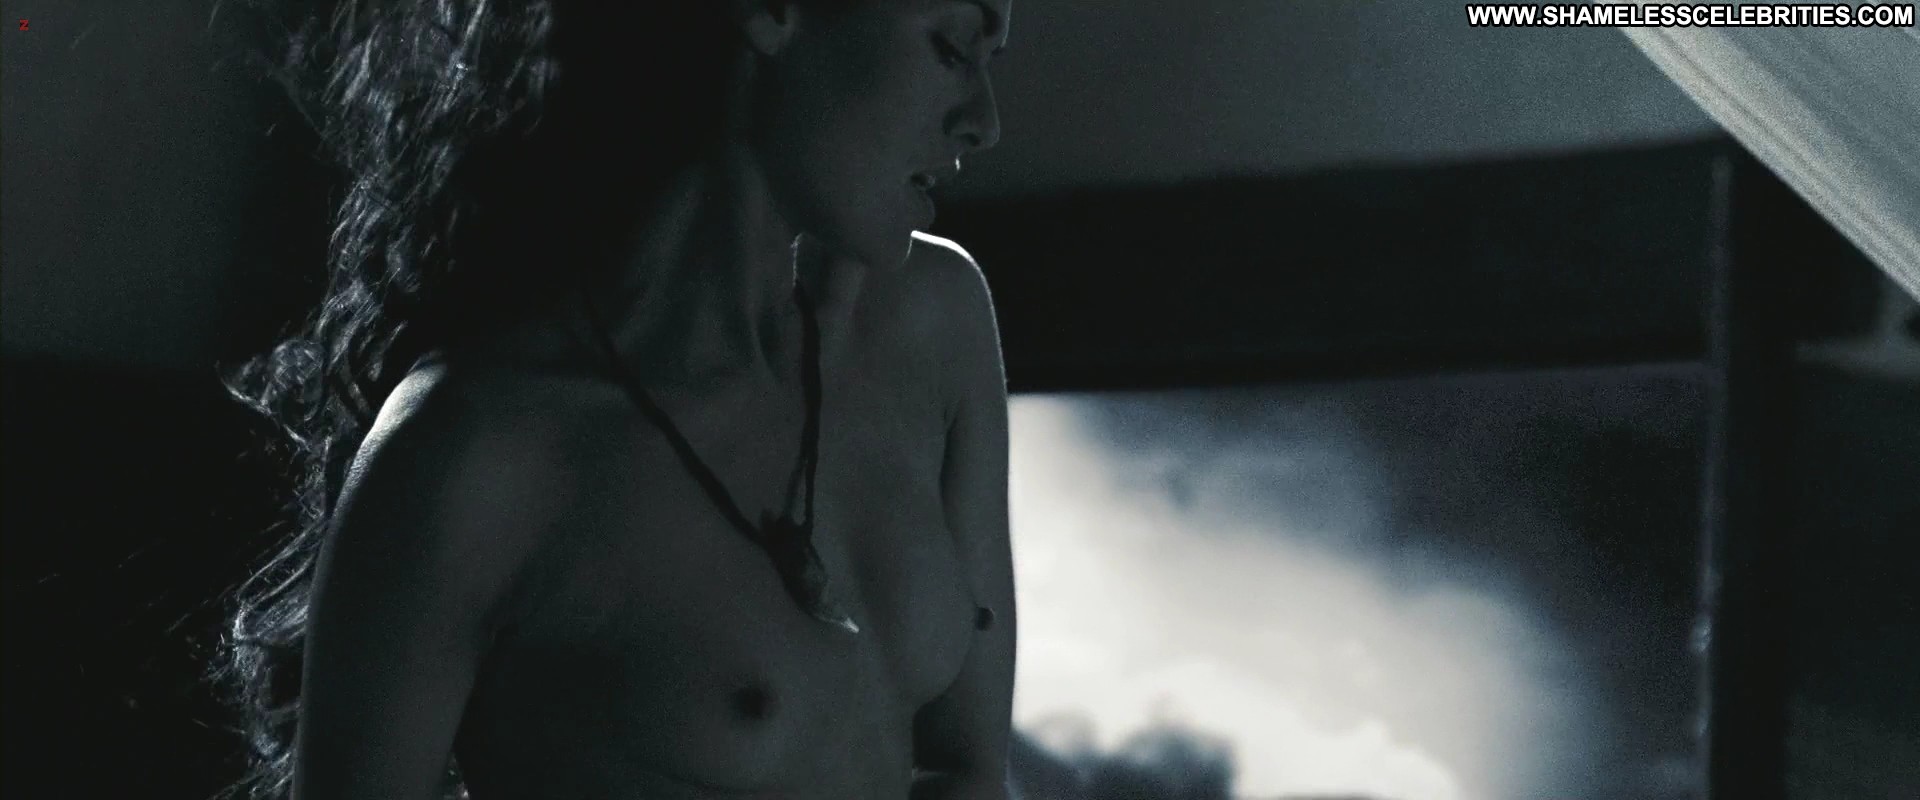 Kelly craig naked - 🧡 Лена хиди голая (79 фото) - скачать порно.